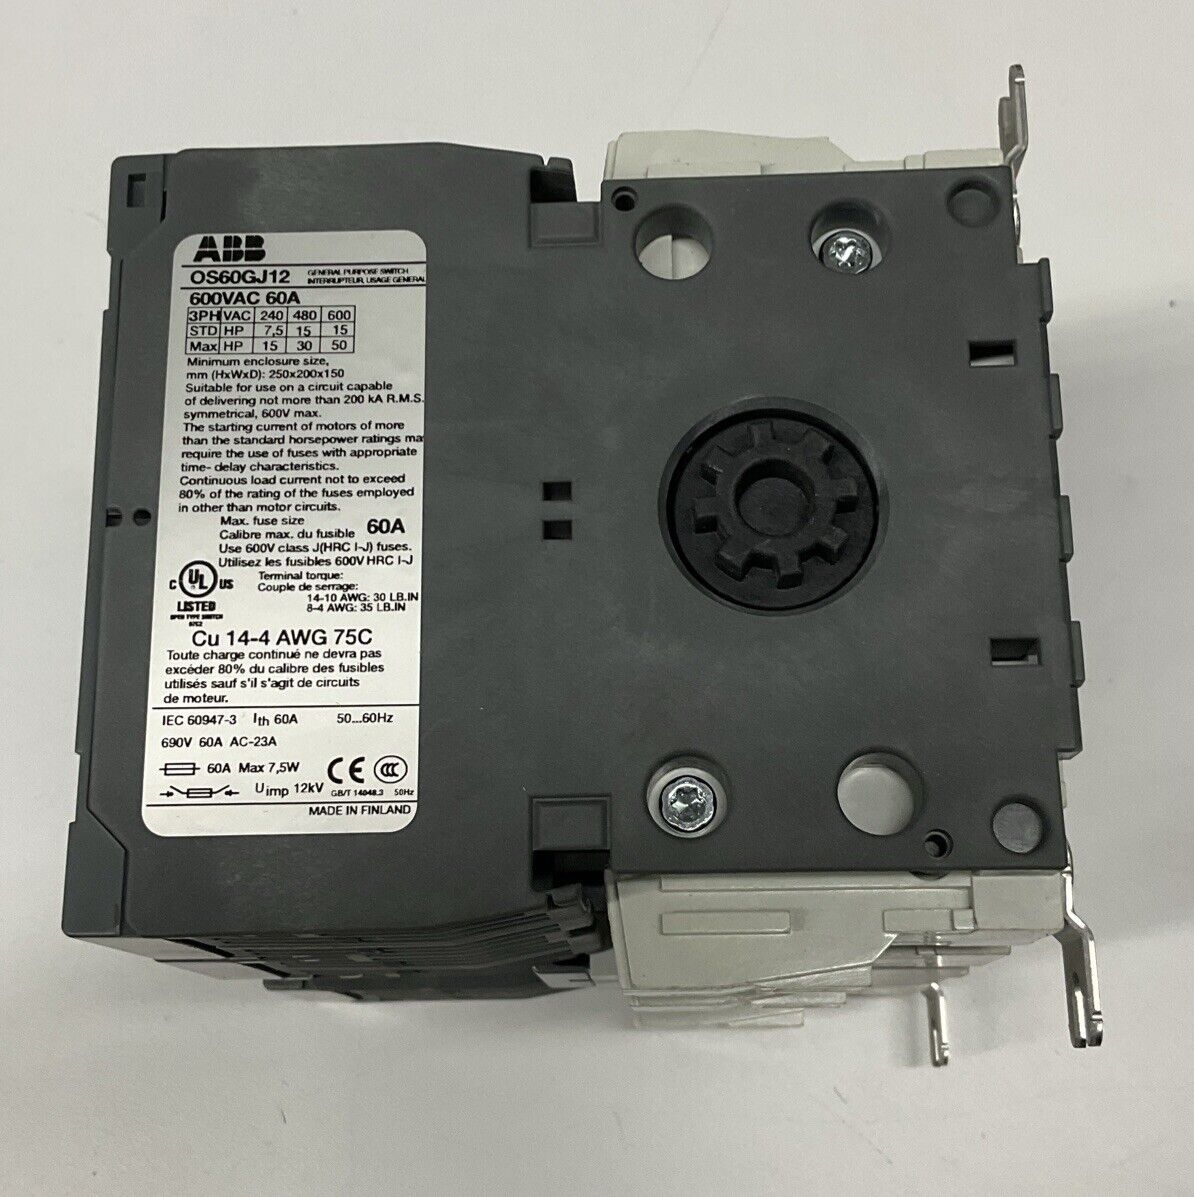 ABB OS60GJ12 Fusible Disconnect 60A 3P 600VAC (CL369)